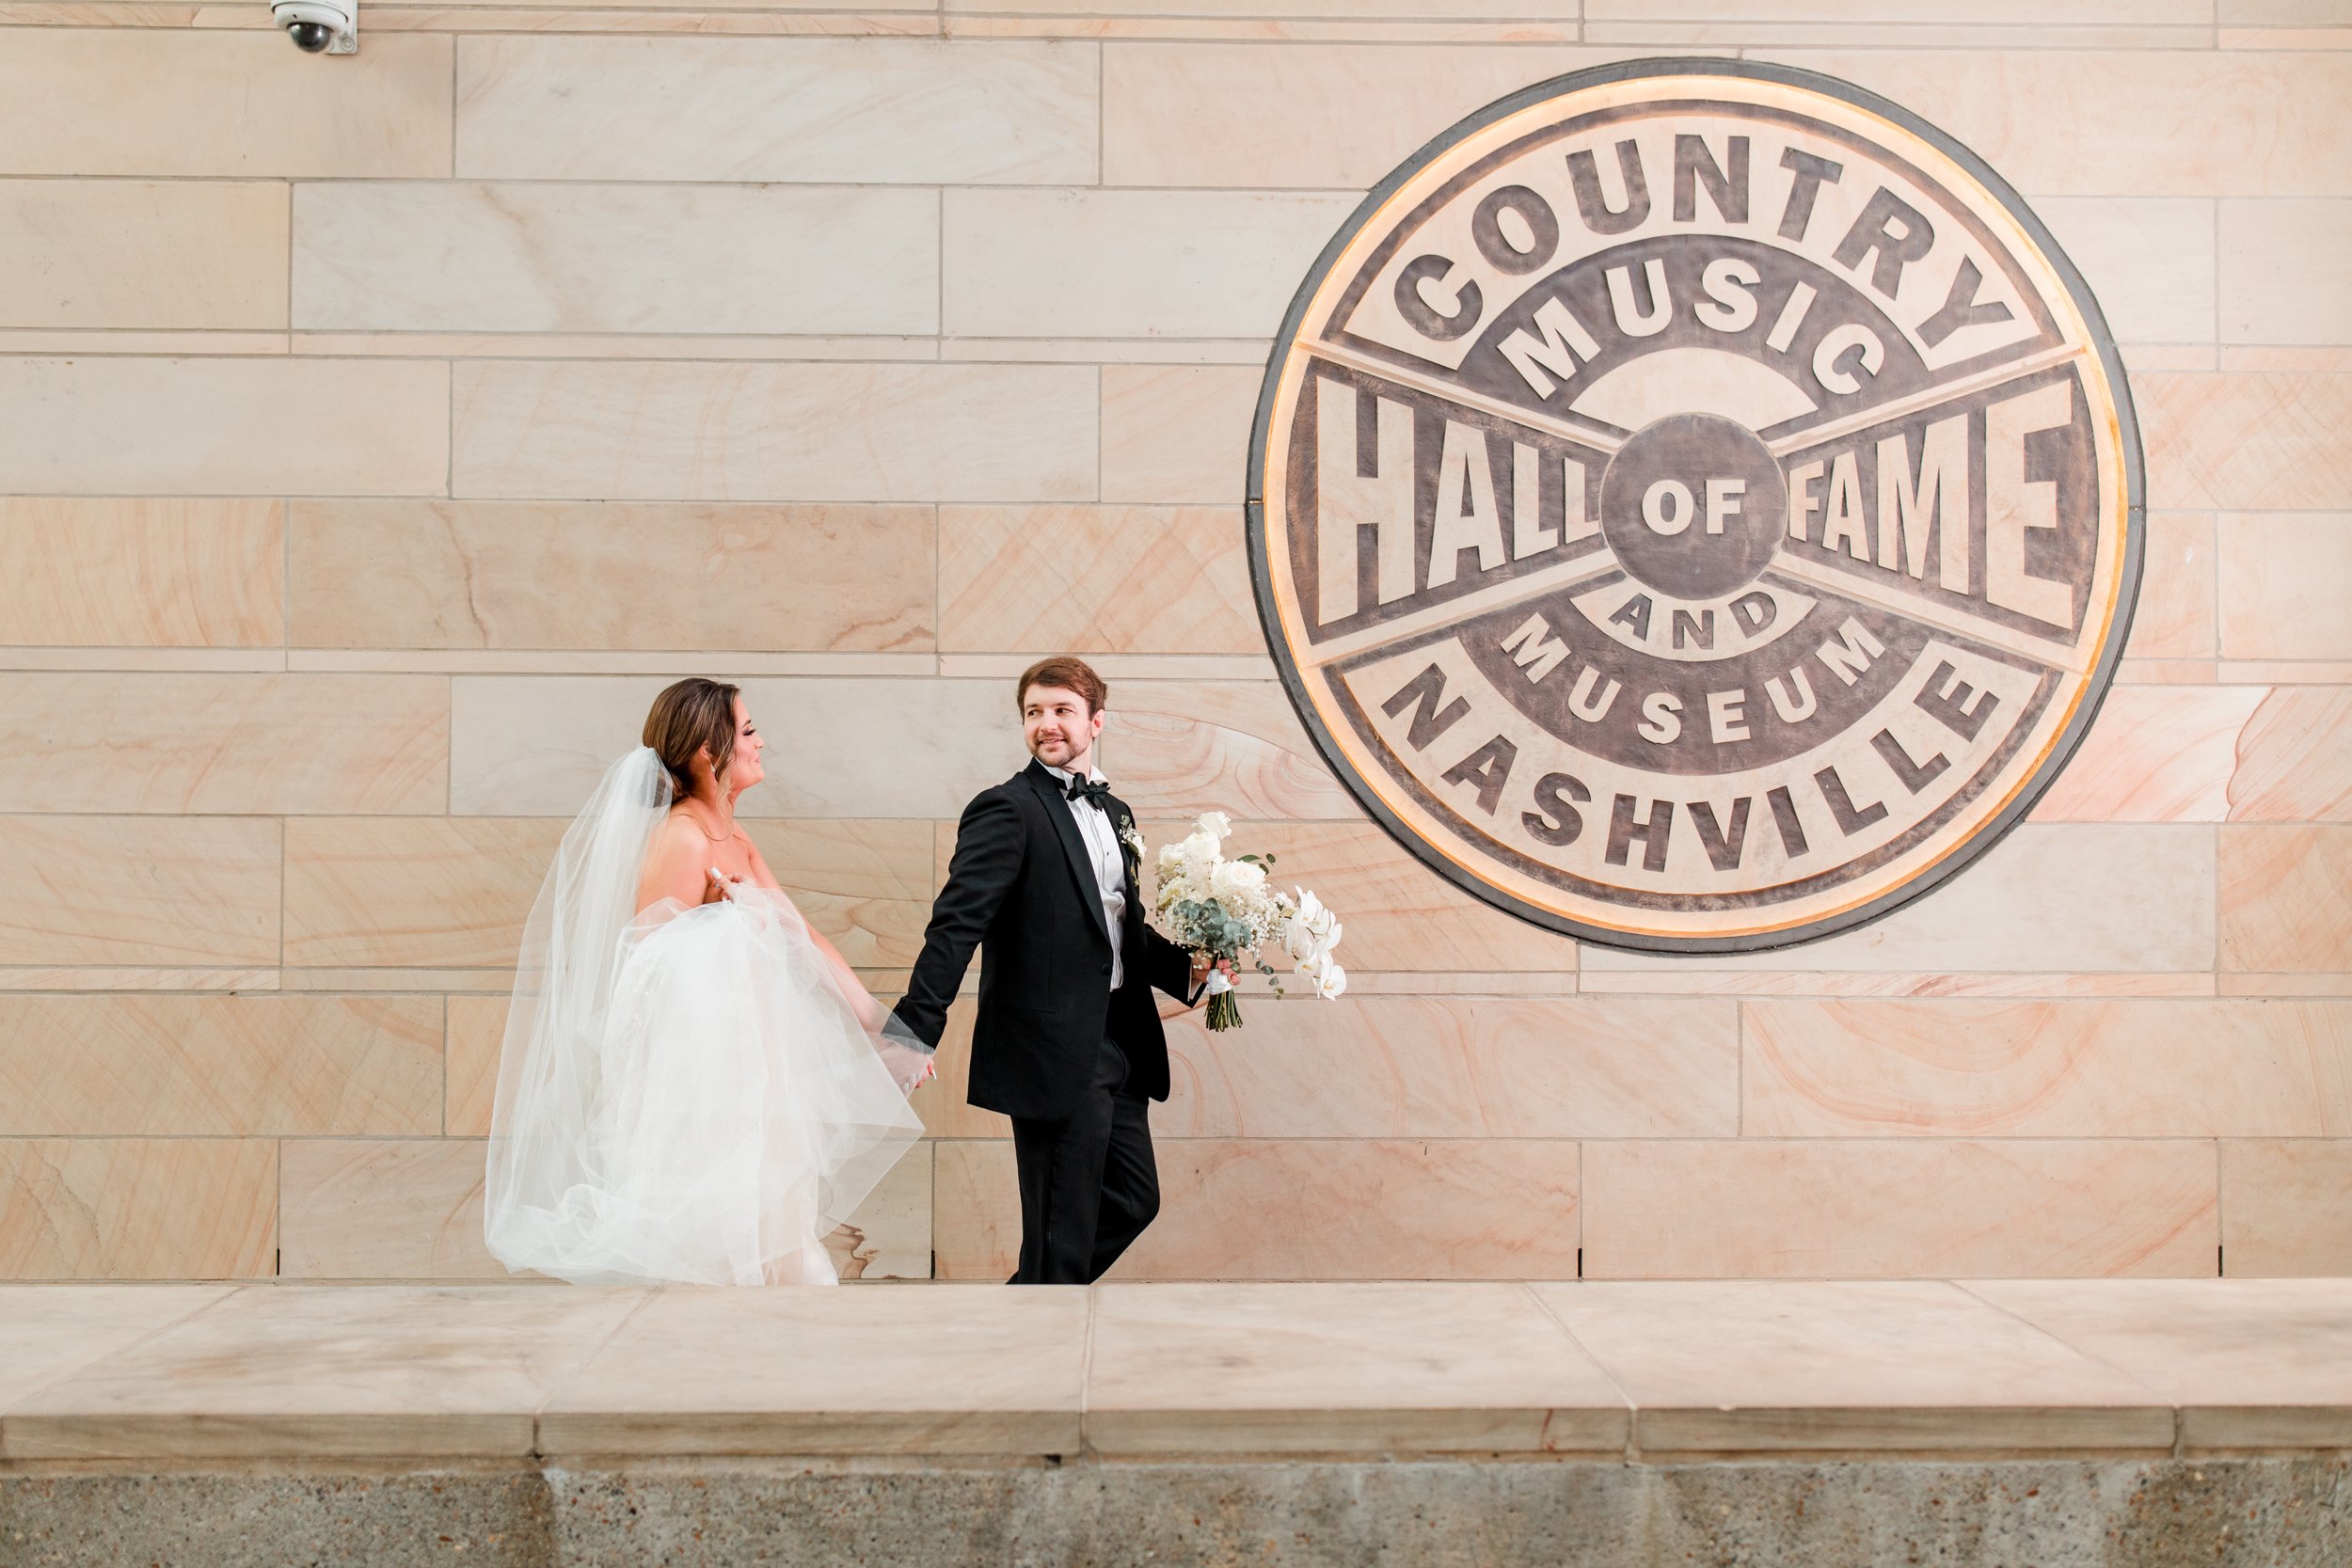 Country Music Hall of Fame Nashville Wedding-99.jpg